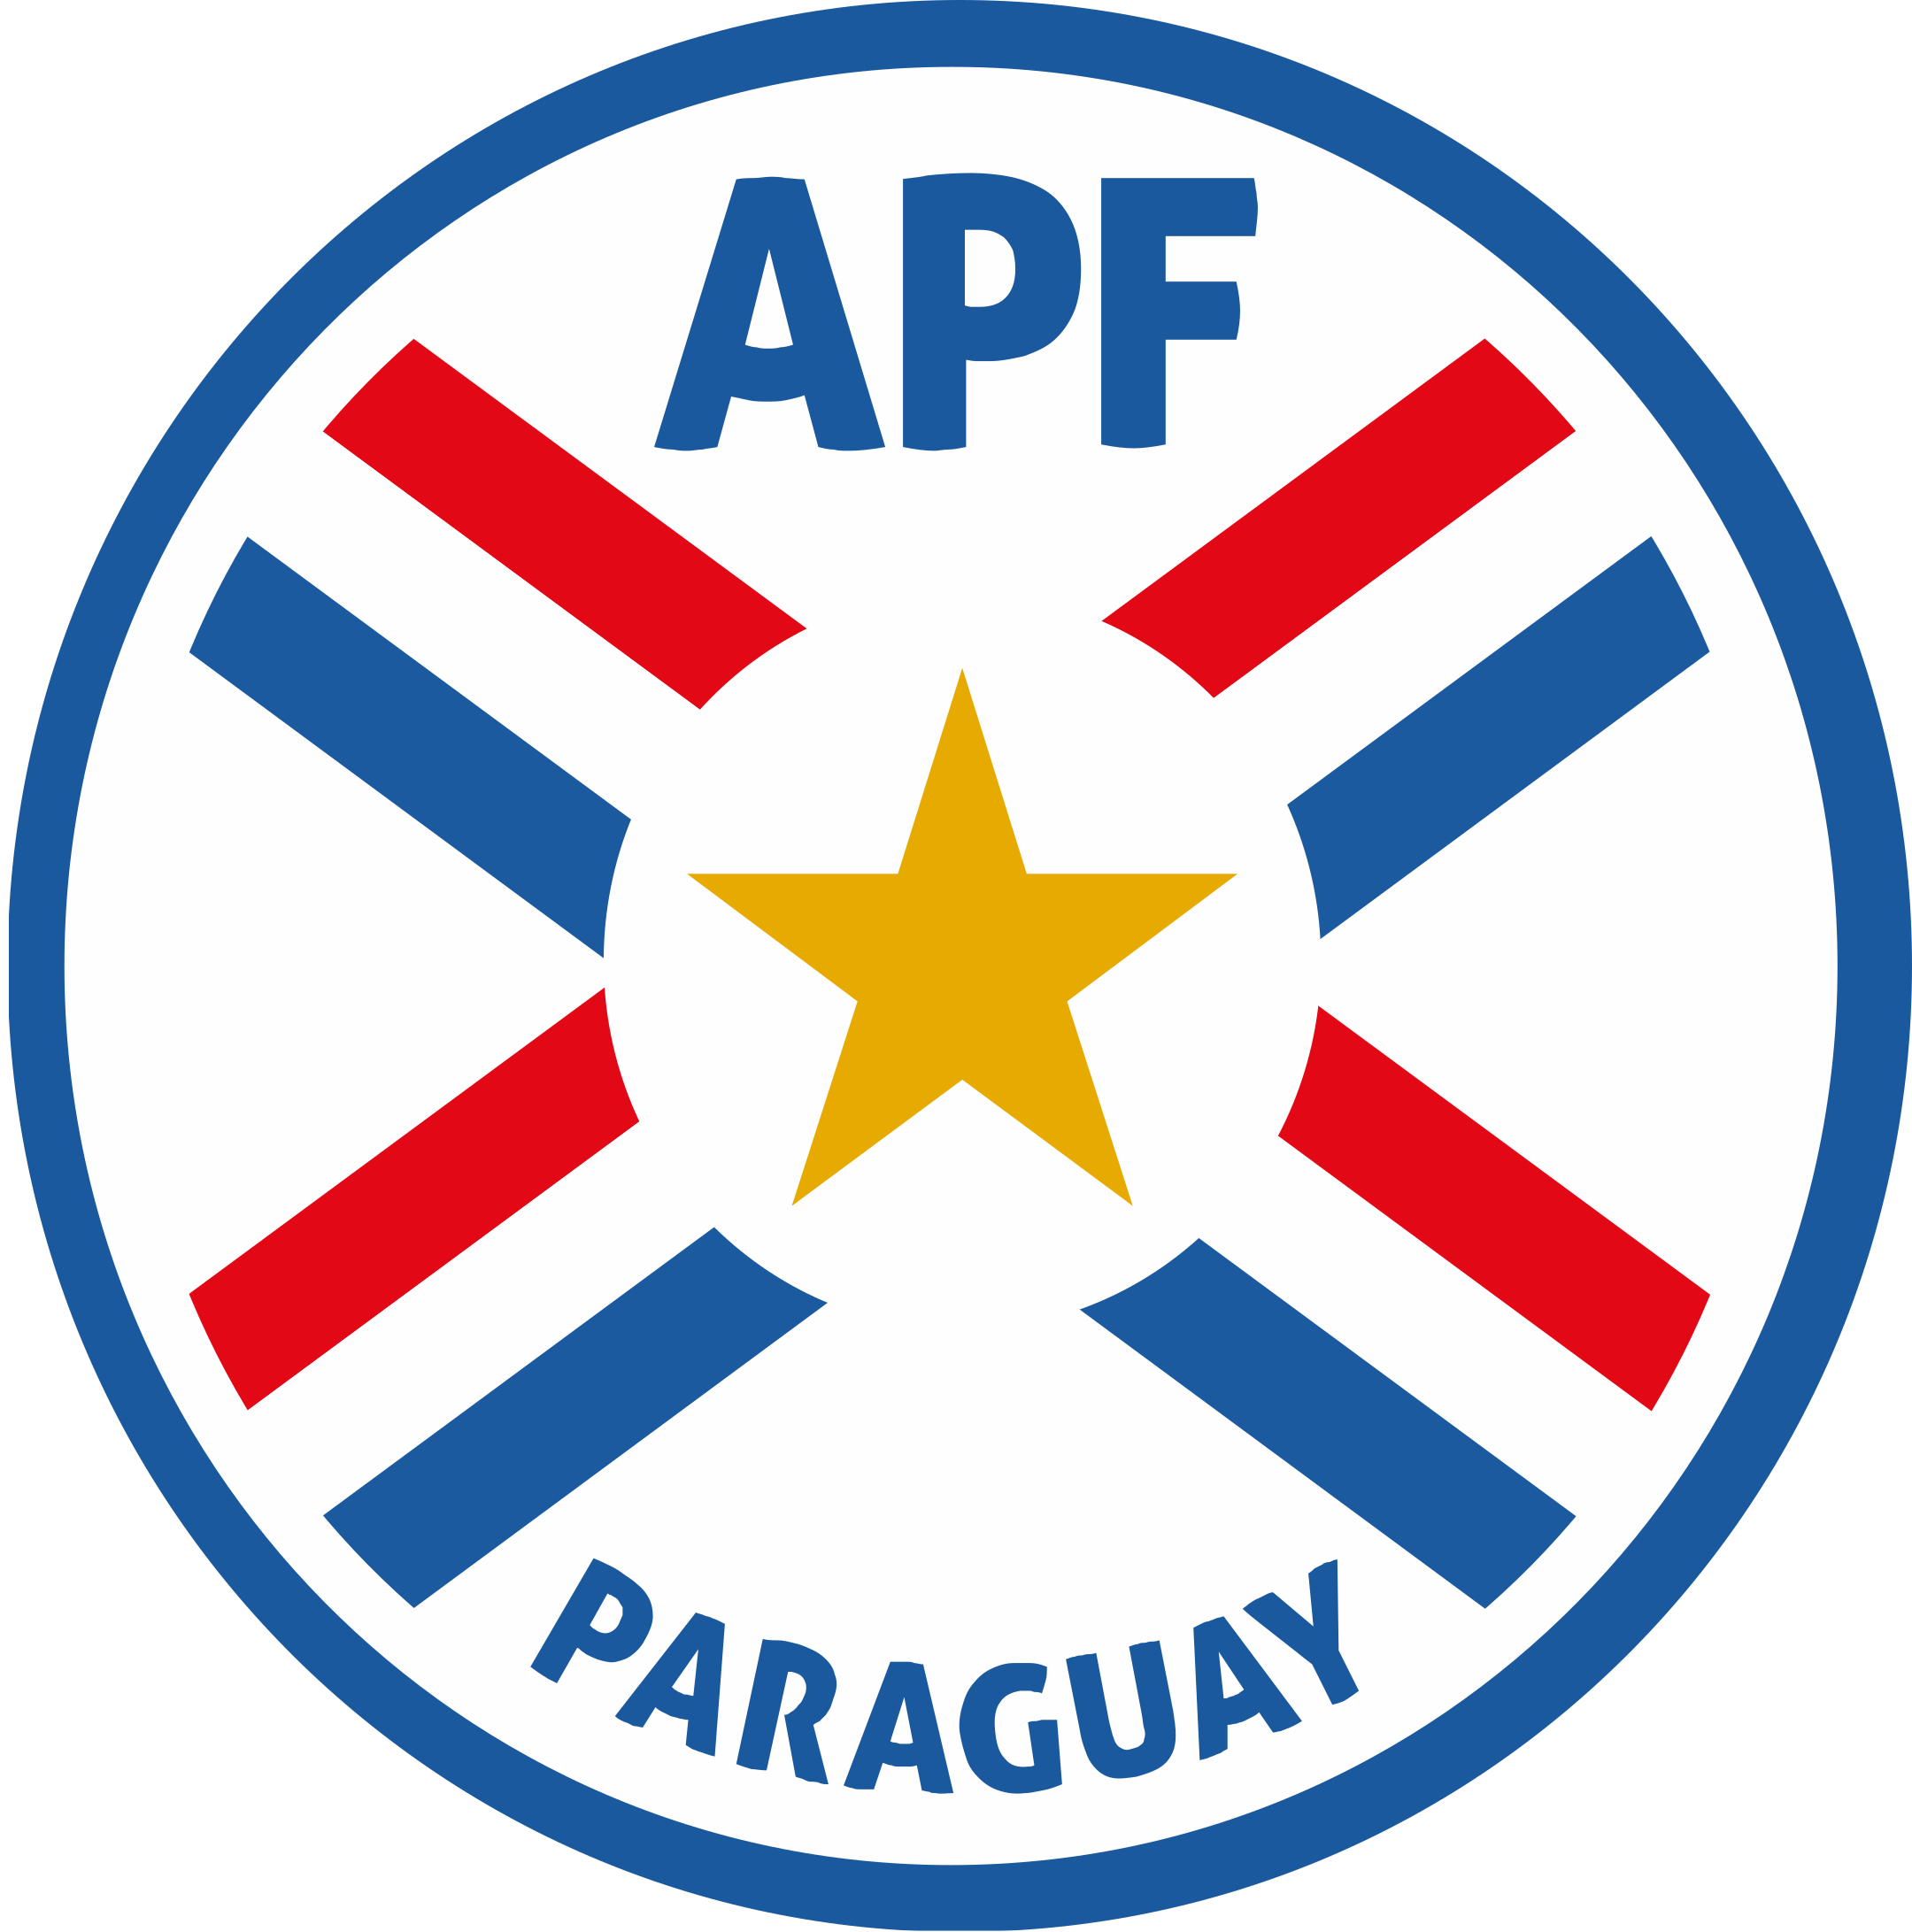 apf seleccion de futbol de paraguay logo 1 - APF Logo - Selección de Fútbol de Paraguay Logo